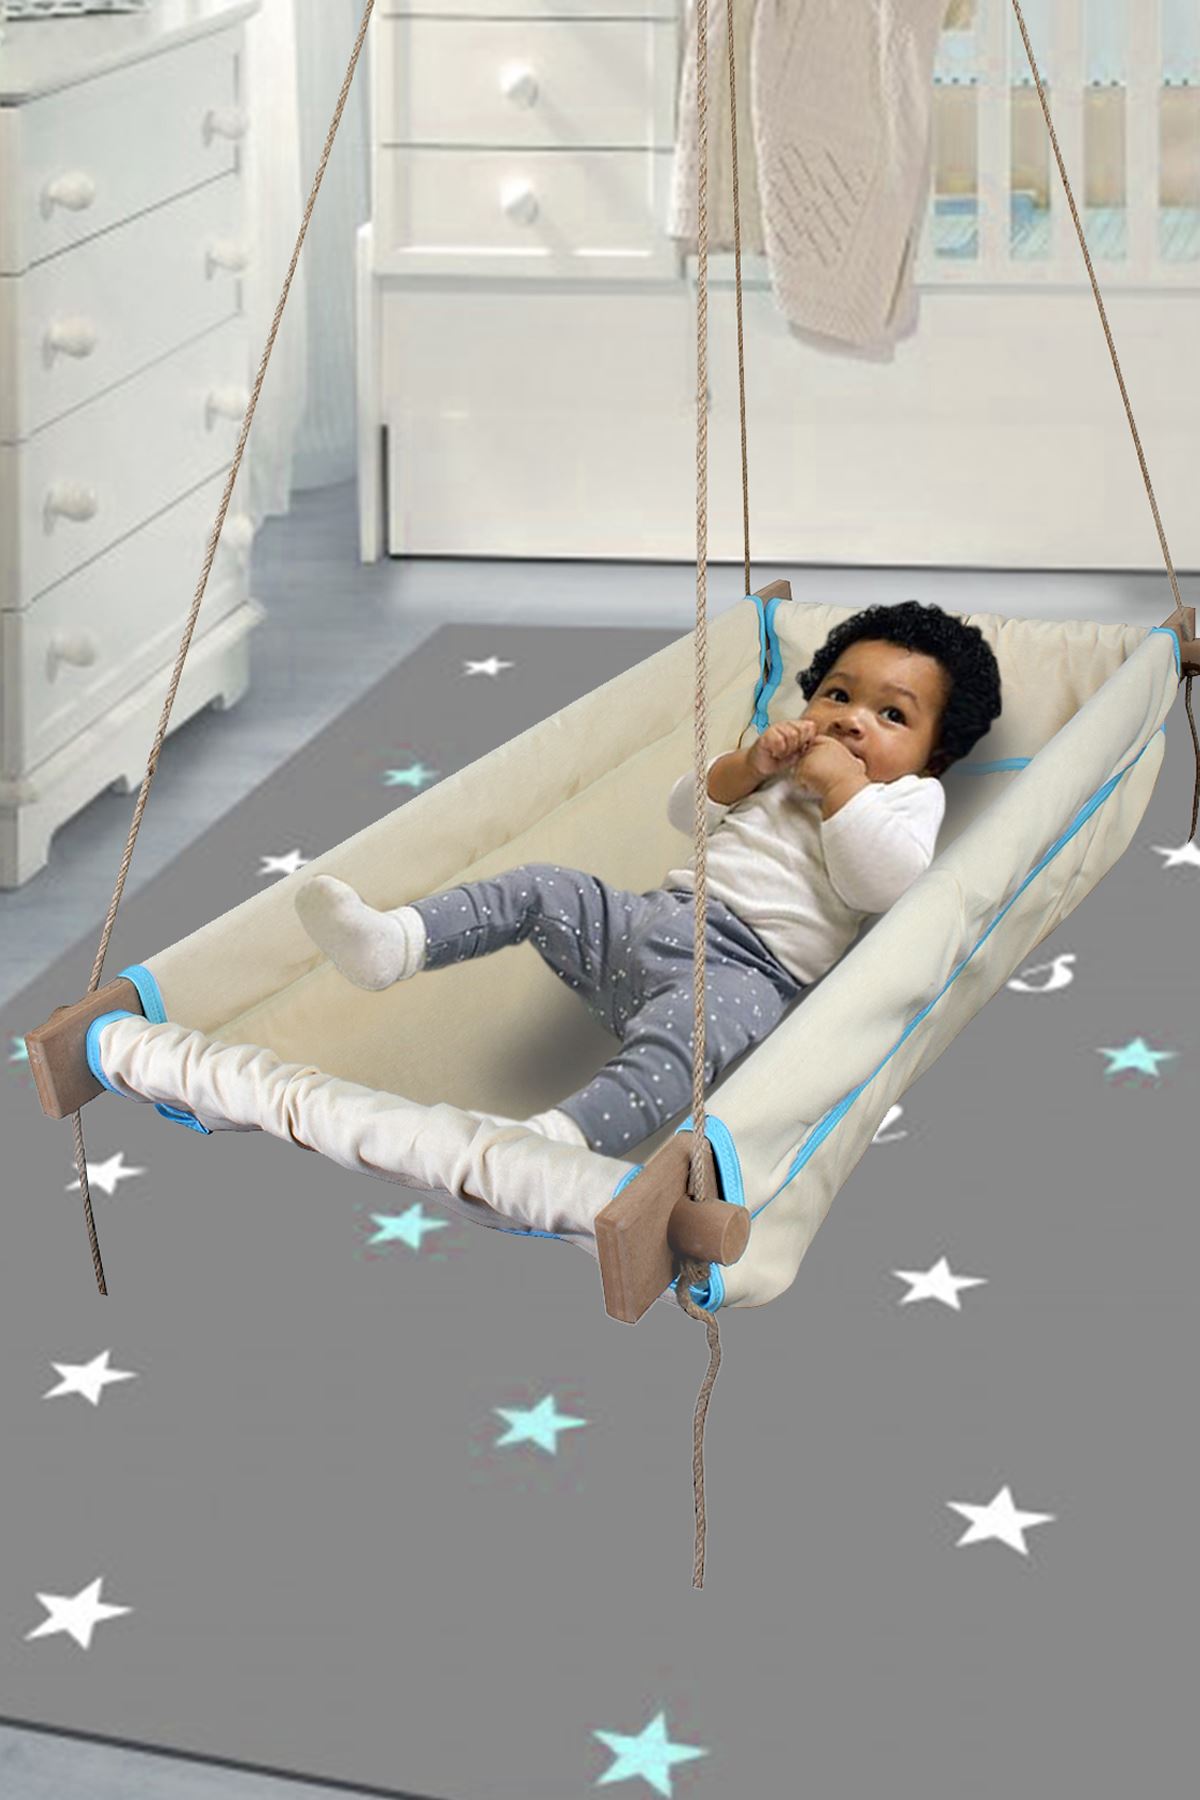 Girl Boy Child Teenager Wooden Baby Sleeping Crib Hammock Babies Toy Garden Camping Rope Swing Chair Fashion Home Fun Activity